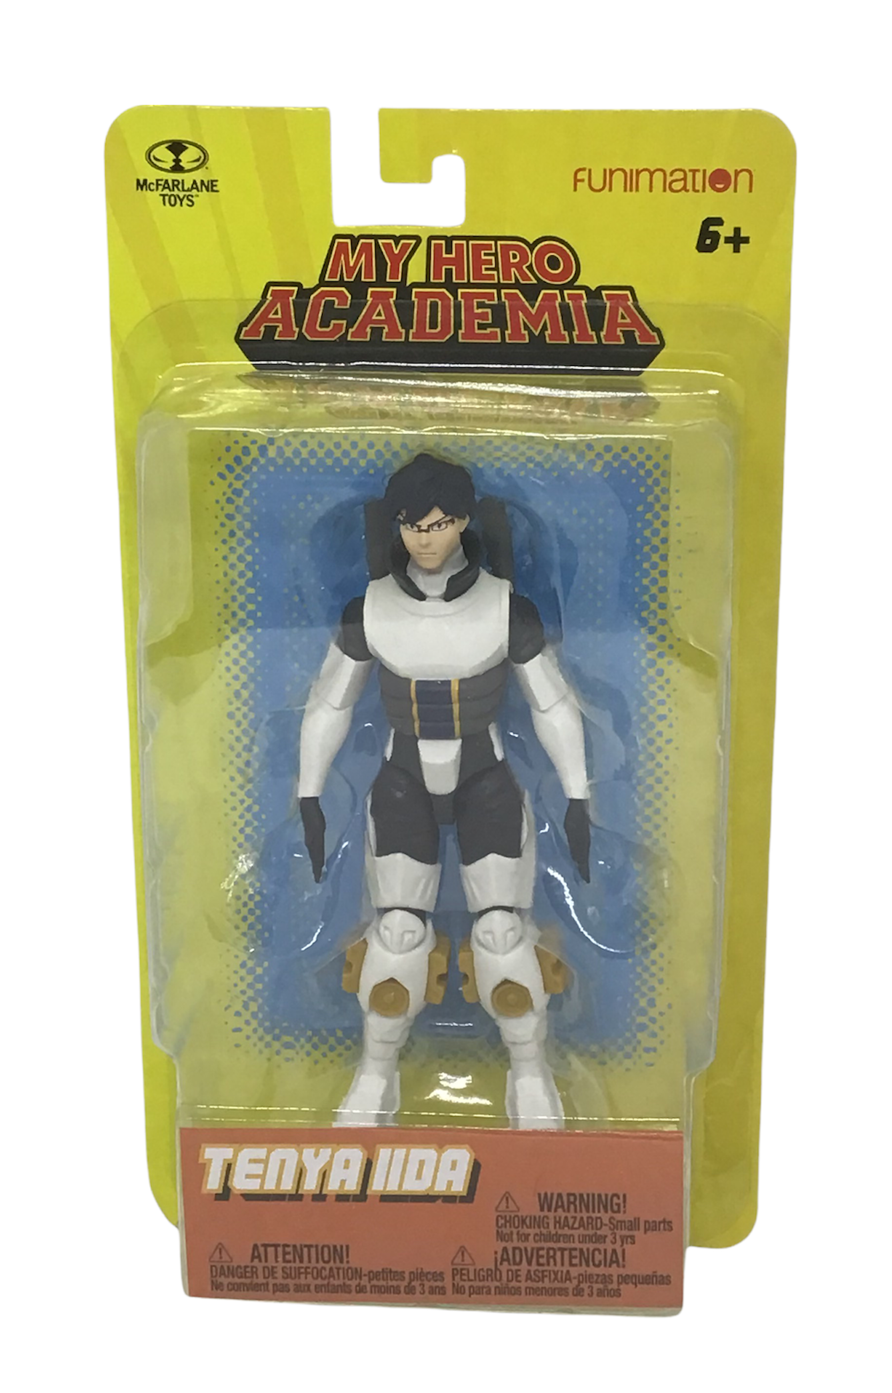 My Hero Academia Tenya LIDA Action Figure Funimation Toy 5 NEW SEALED PACKAGE